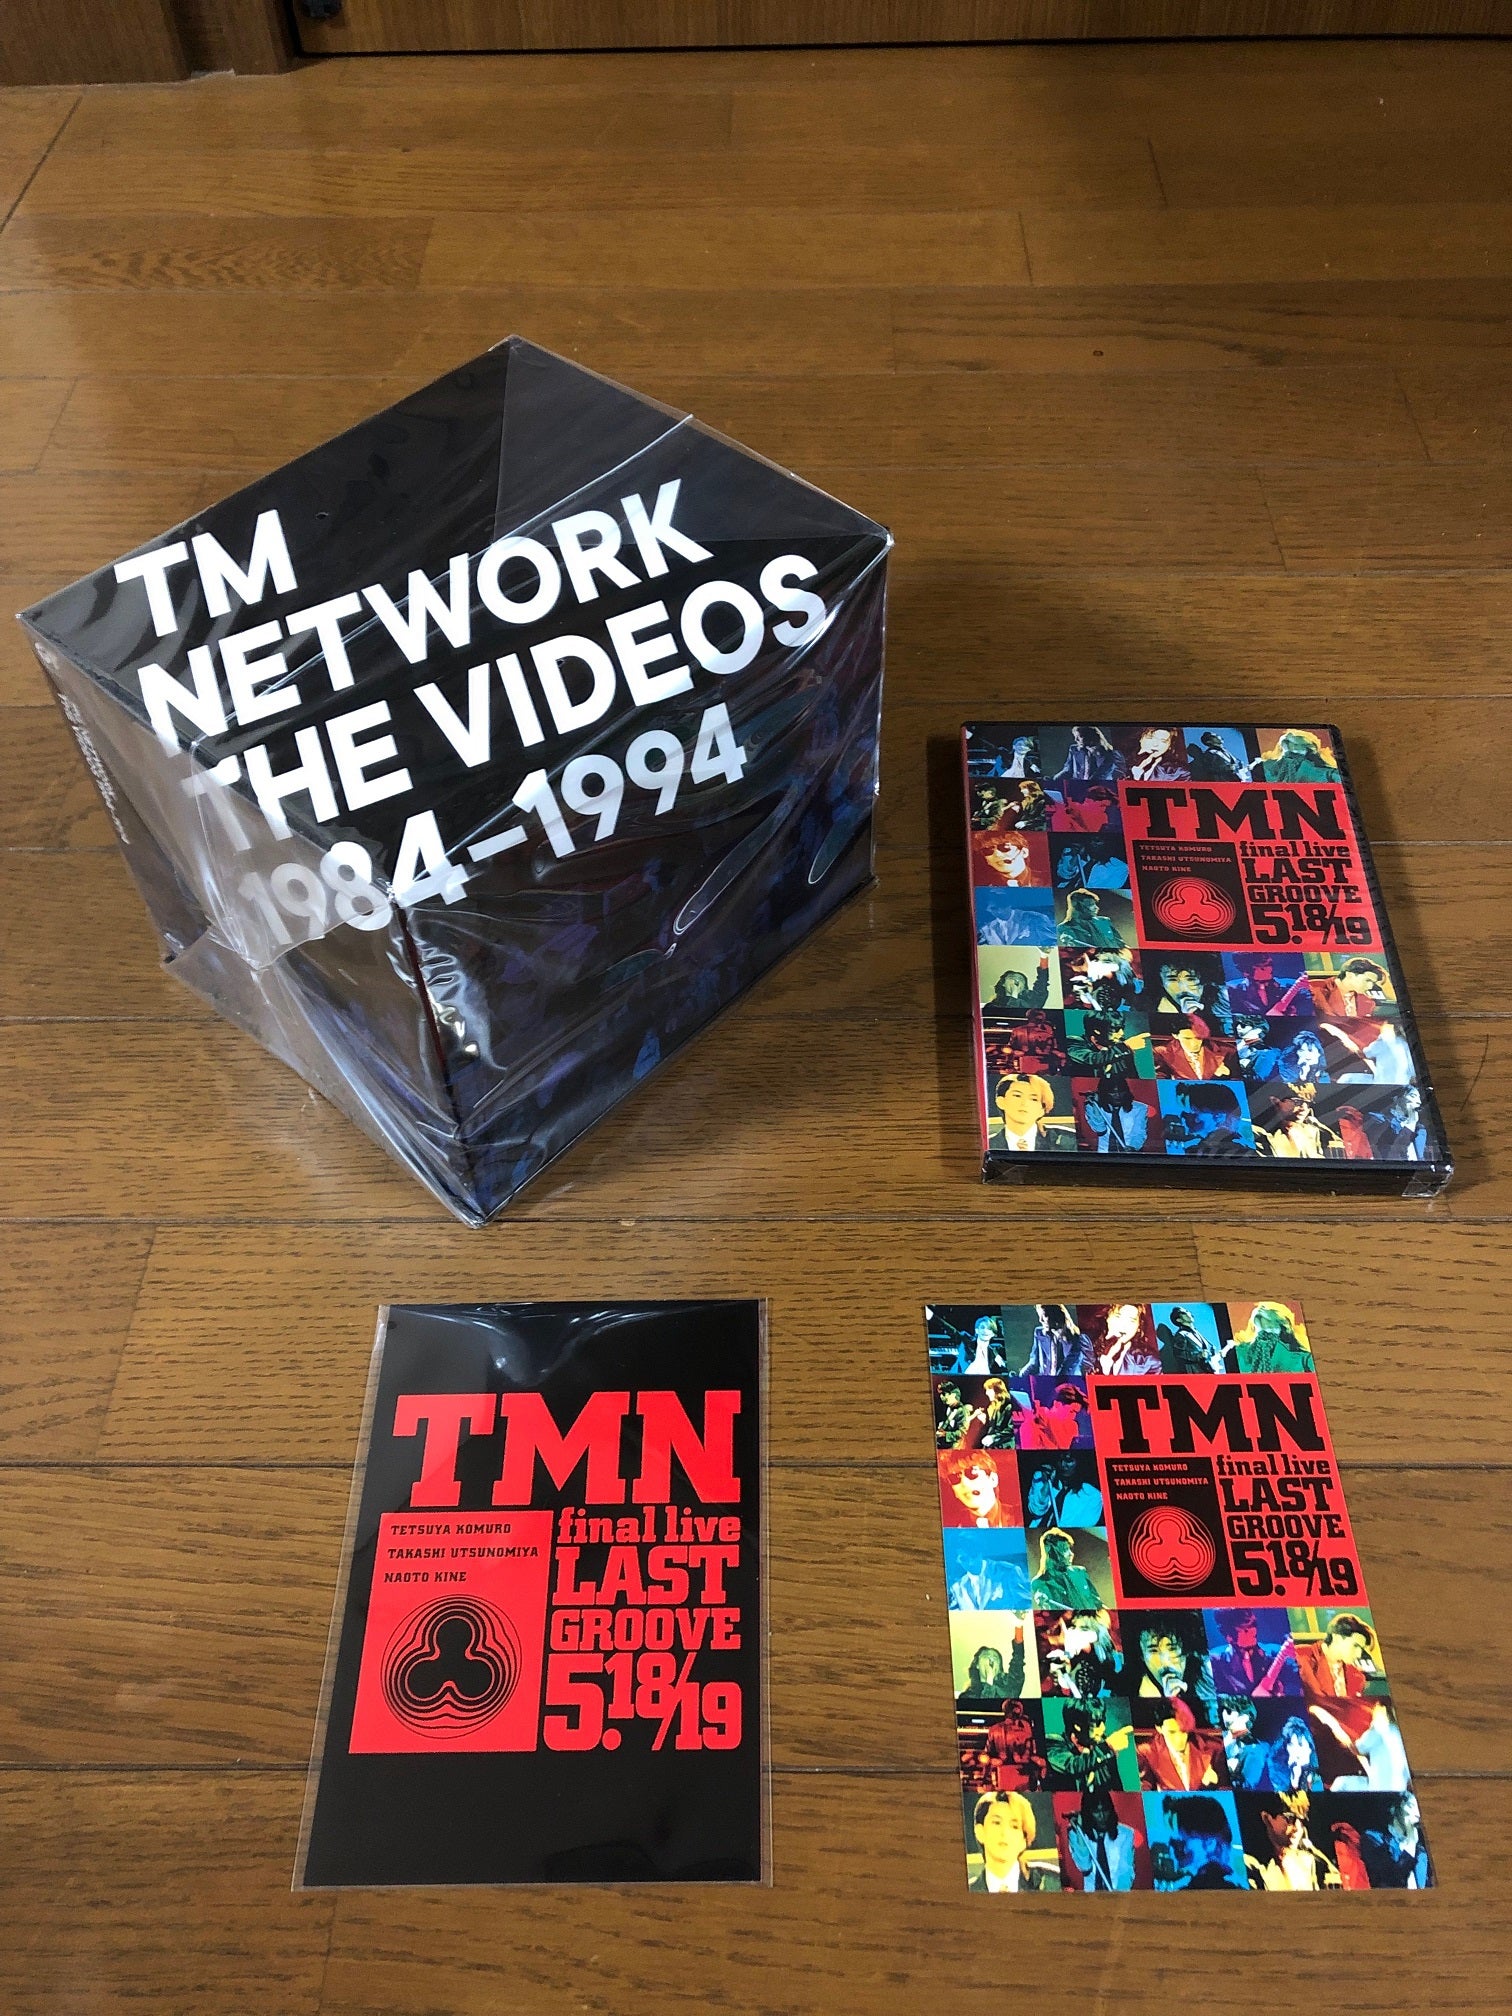 TM NETWORK THE VIDEOS 1984-1994-